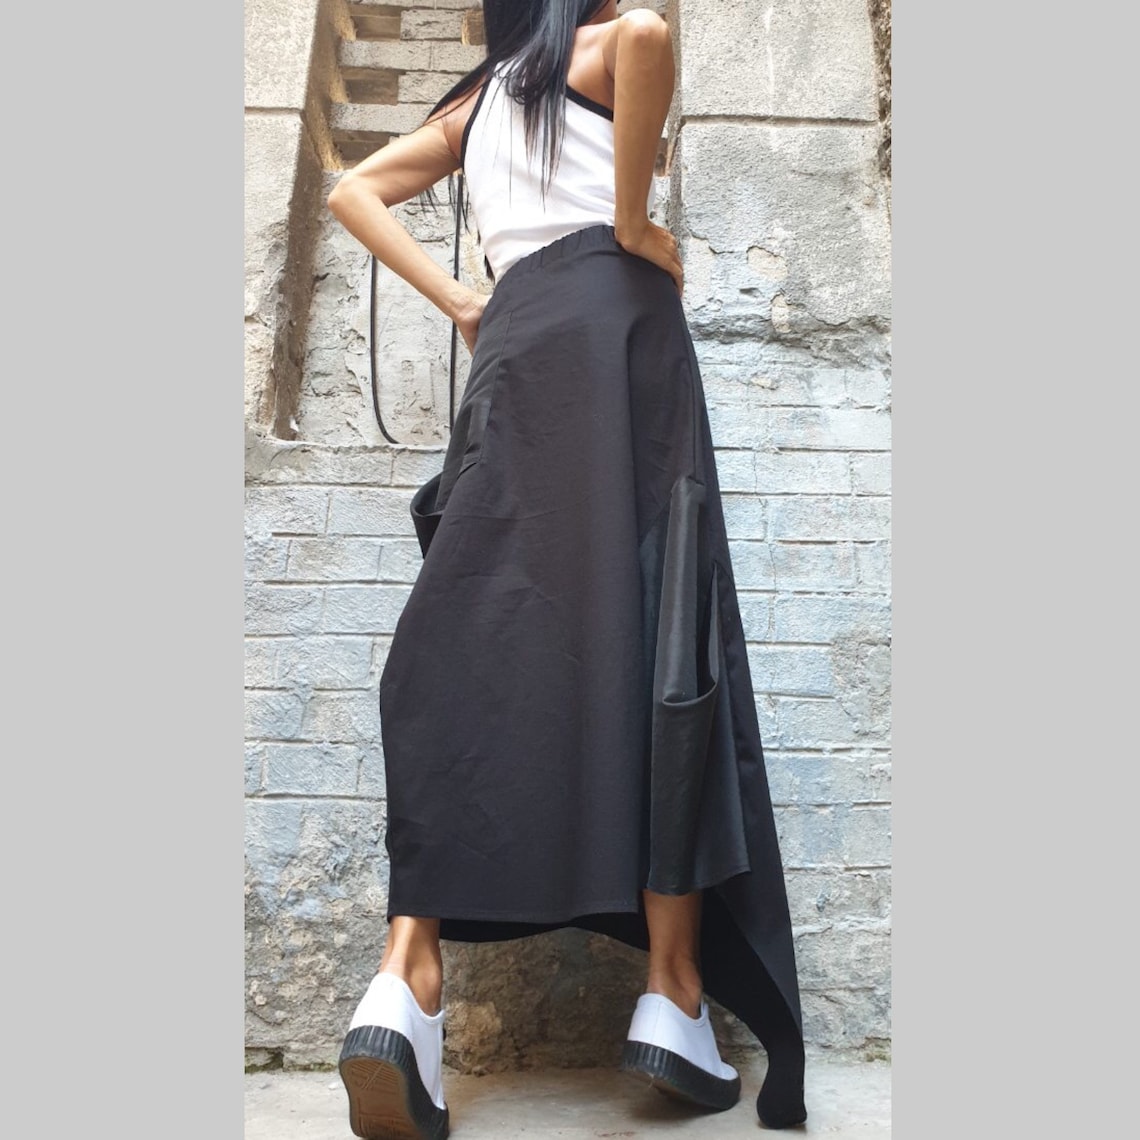 Extravagant Long Skirt/ Casual Comfortable Skirt/Avant-garde | Etsy